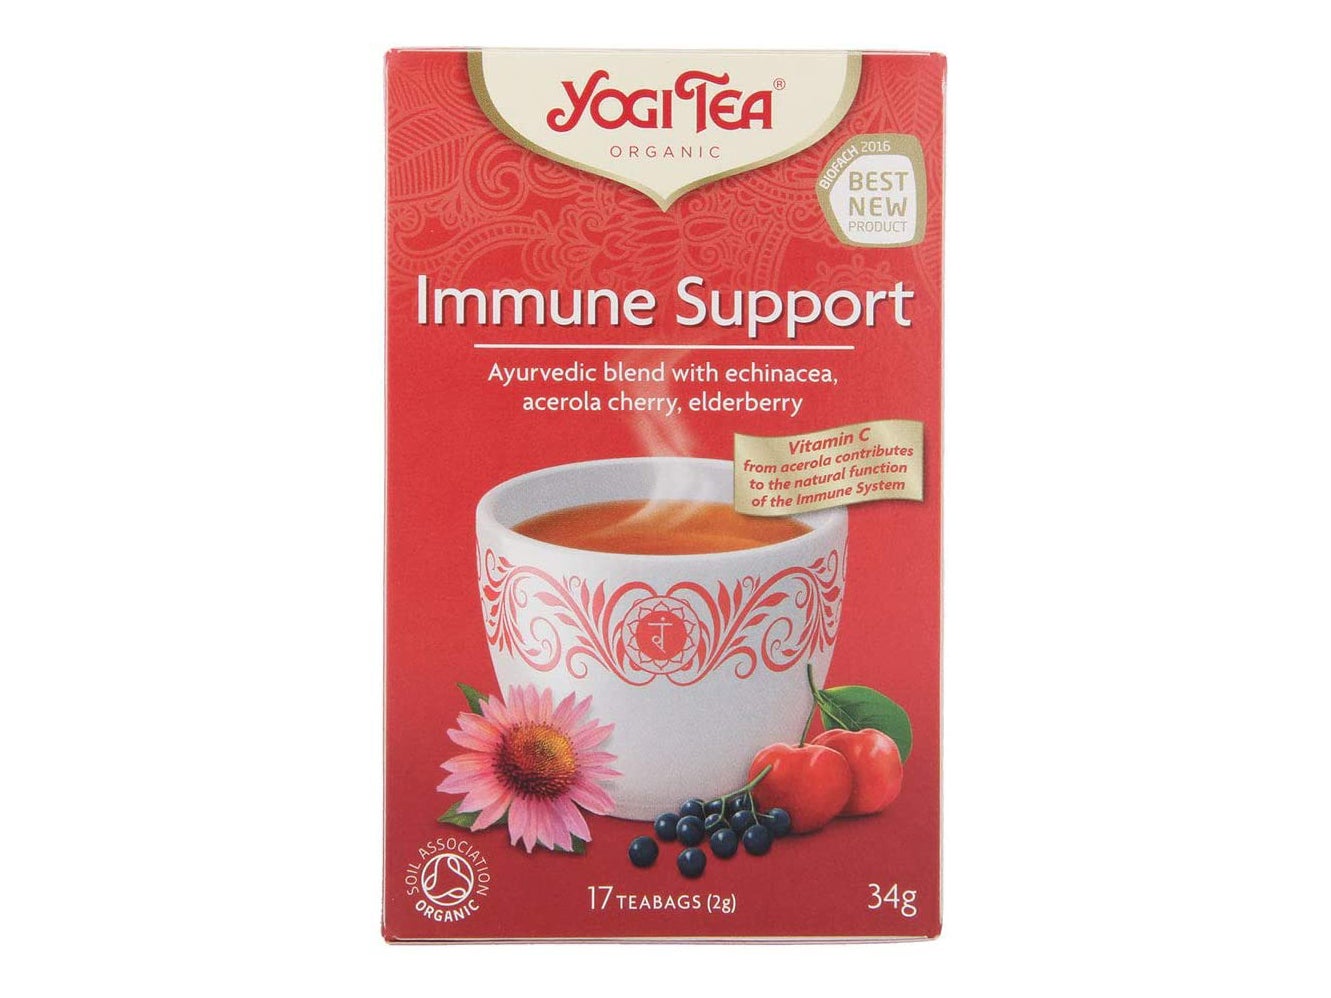 Yogi tea immune support.jpg